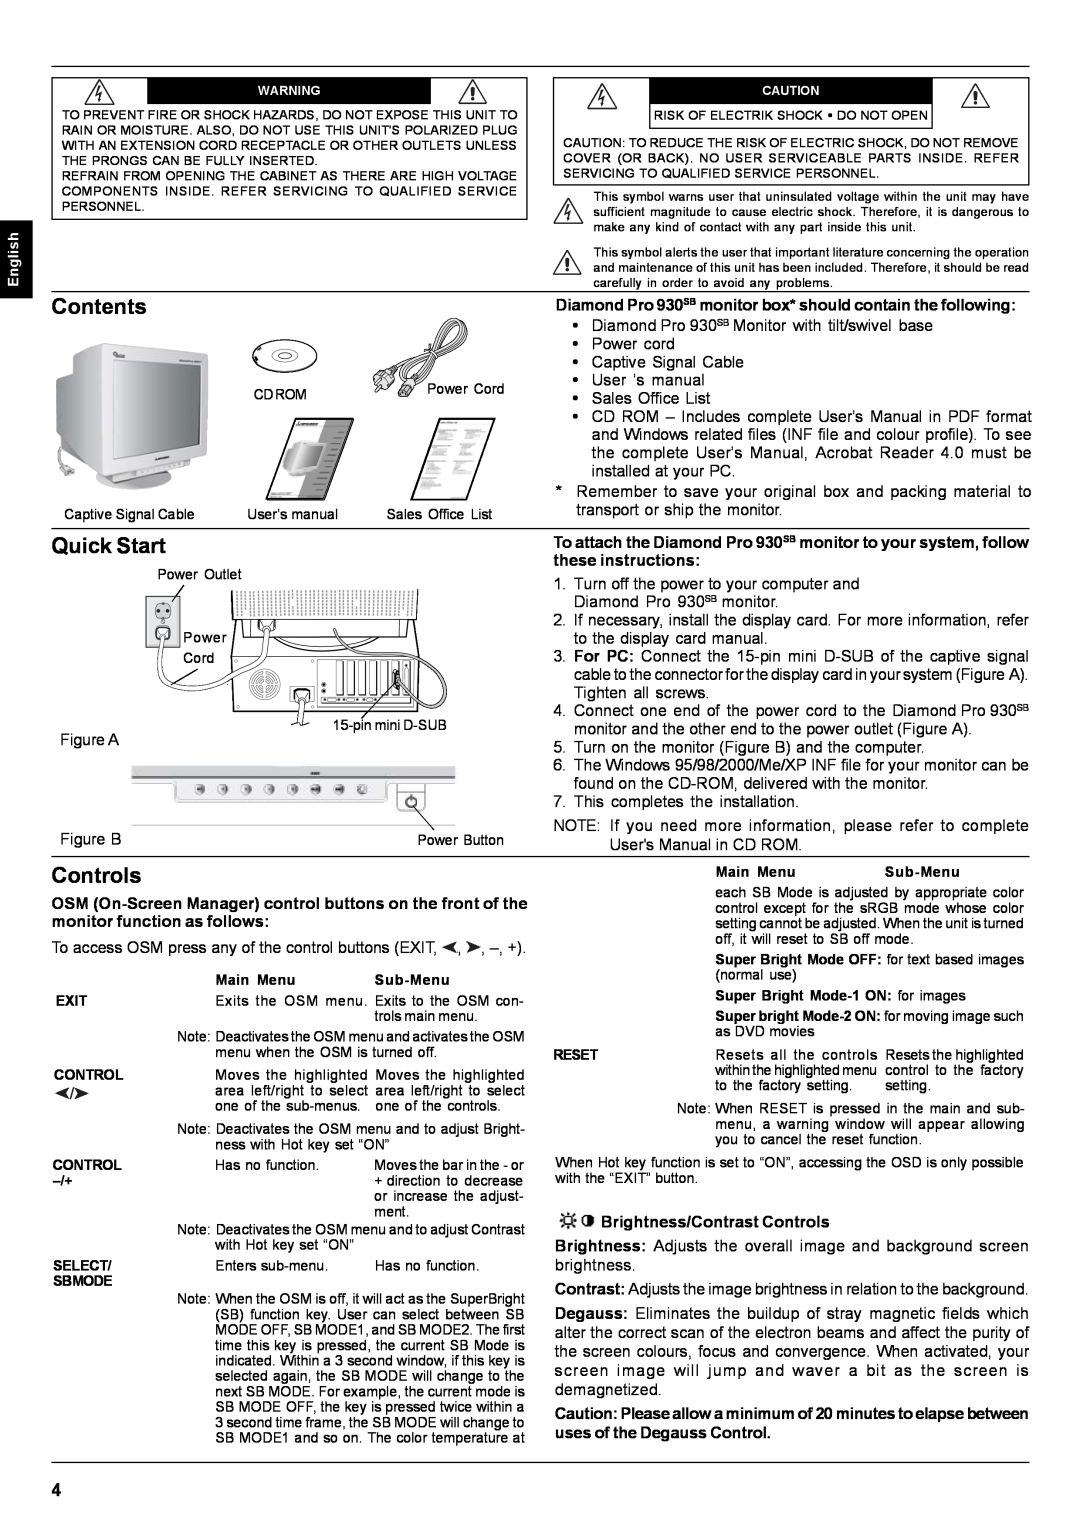 Mitsubishi Electronics Pro 930SB user manual Contents, Quick Start, Controls, monitor function as follows 